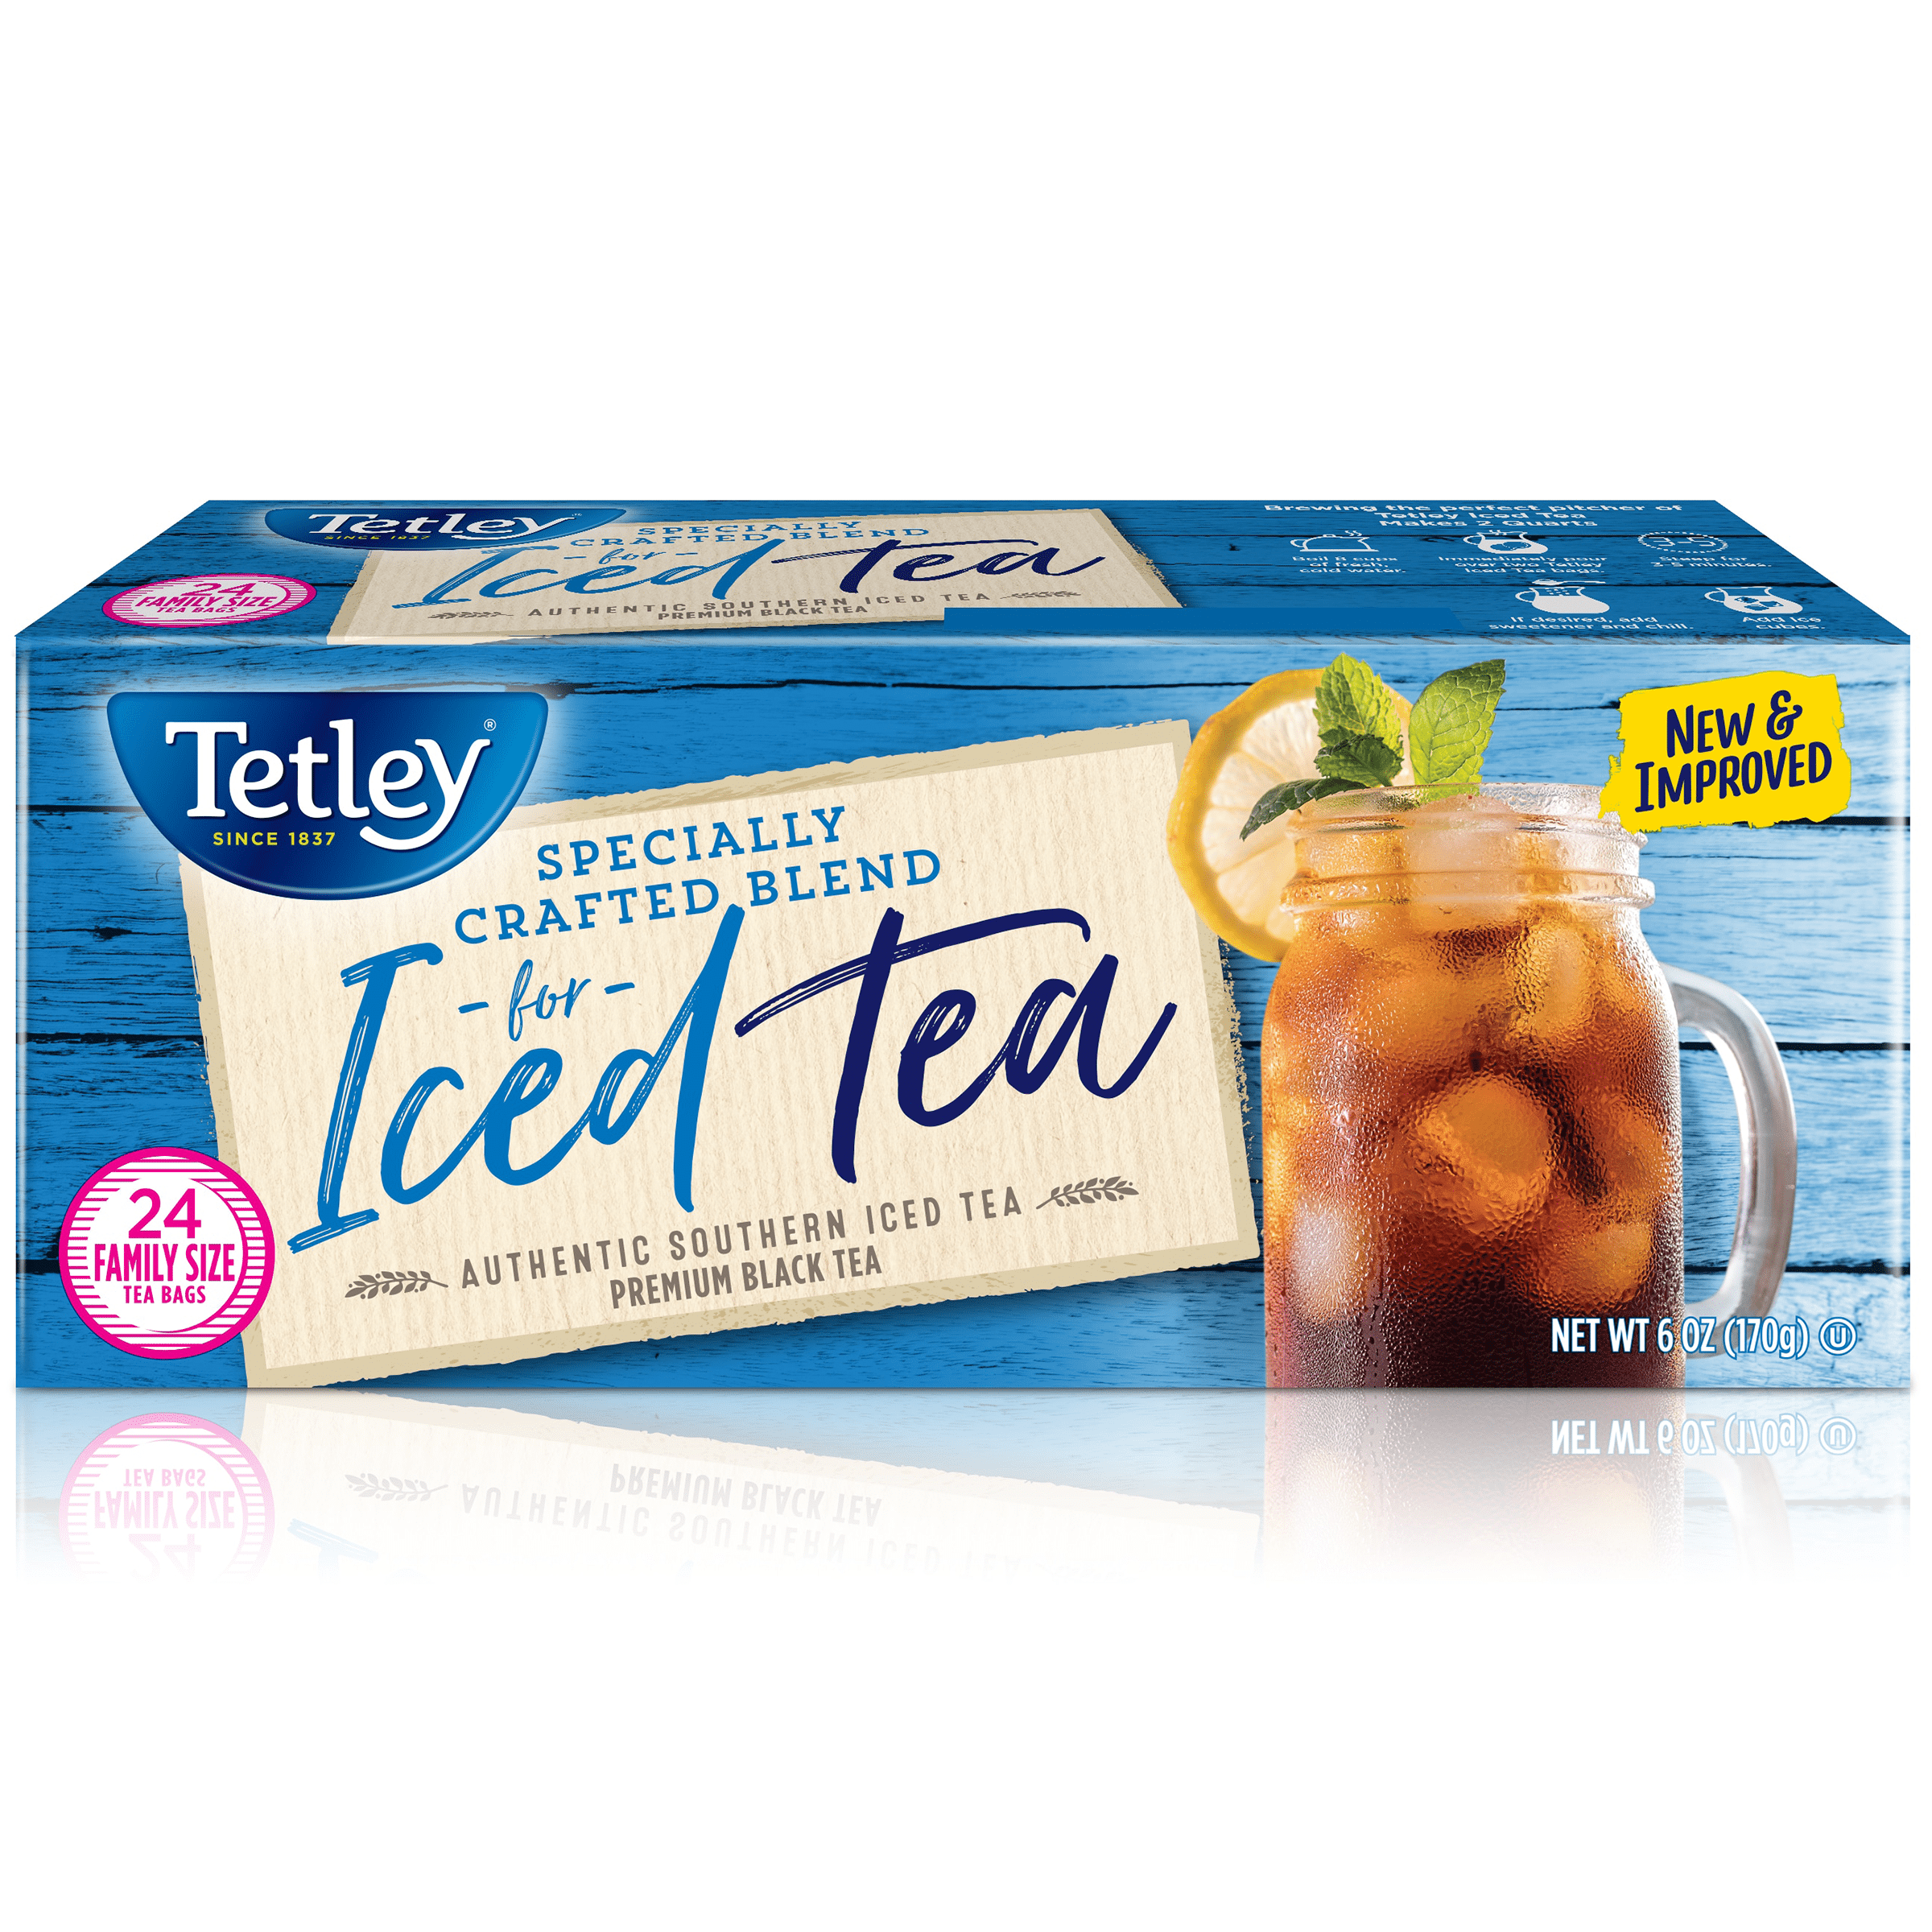 Amazoncom  Tetley Iced Tea Blend Tea Bags 24 count 6 oz  Grocery   Gourmet Food